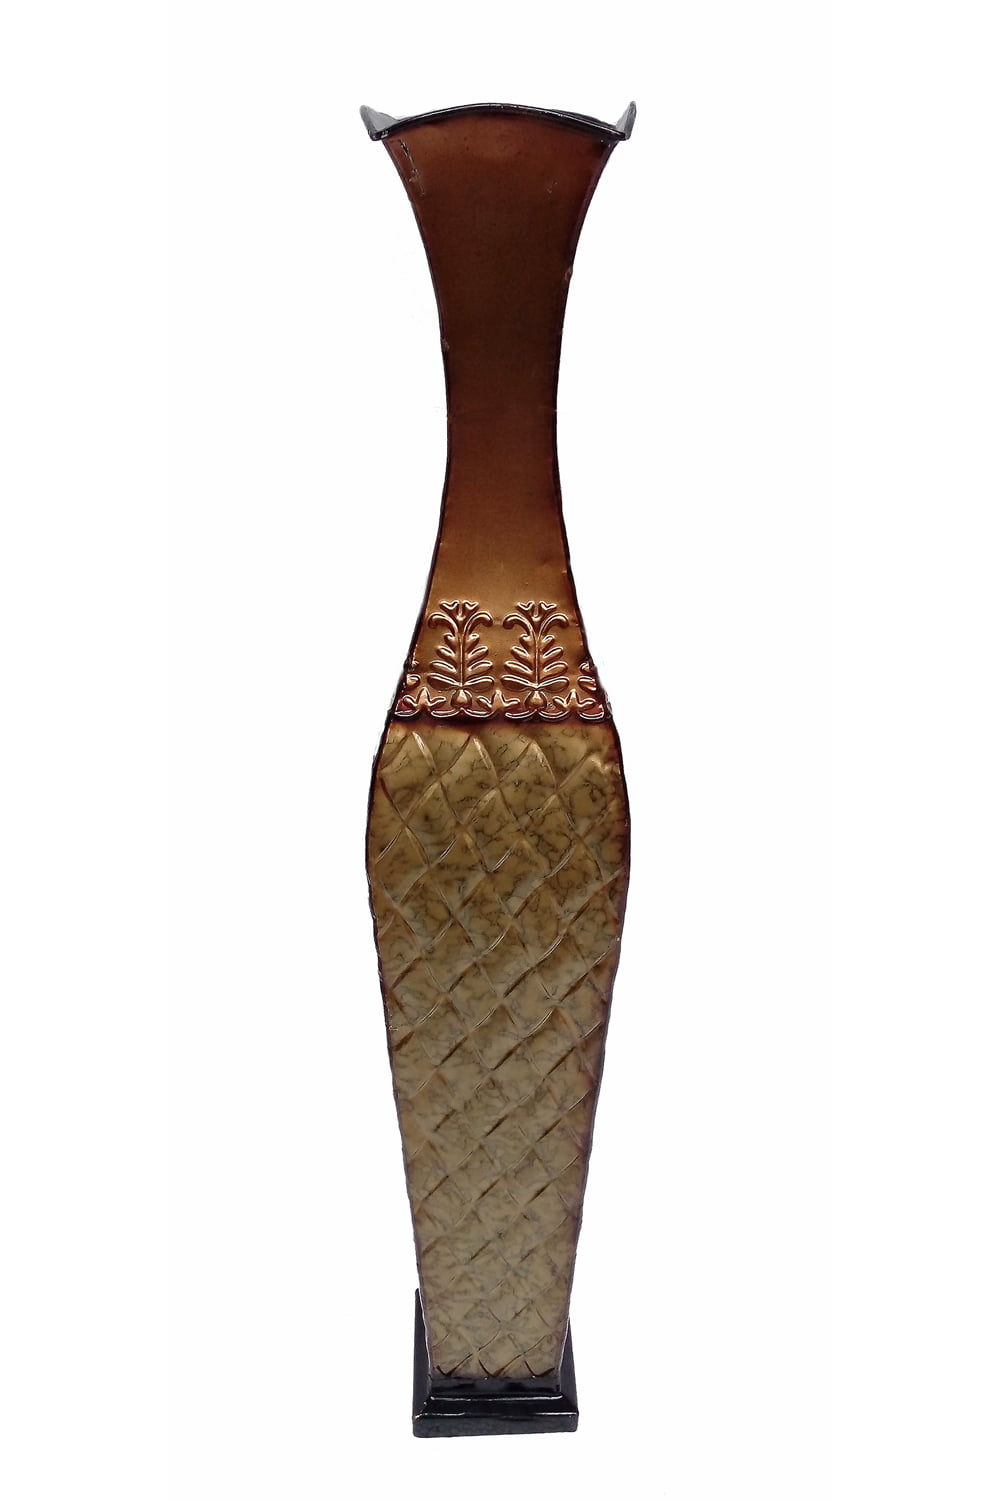 DLusso Designs StealStreet SS-DD-TR4006 32 Nola Collection Metal Floor Vase